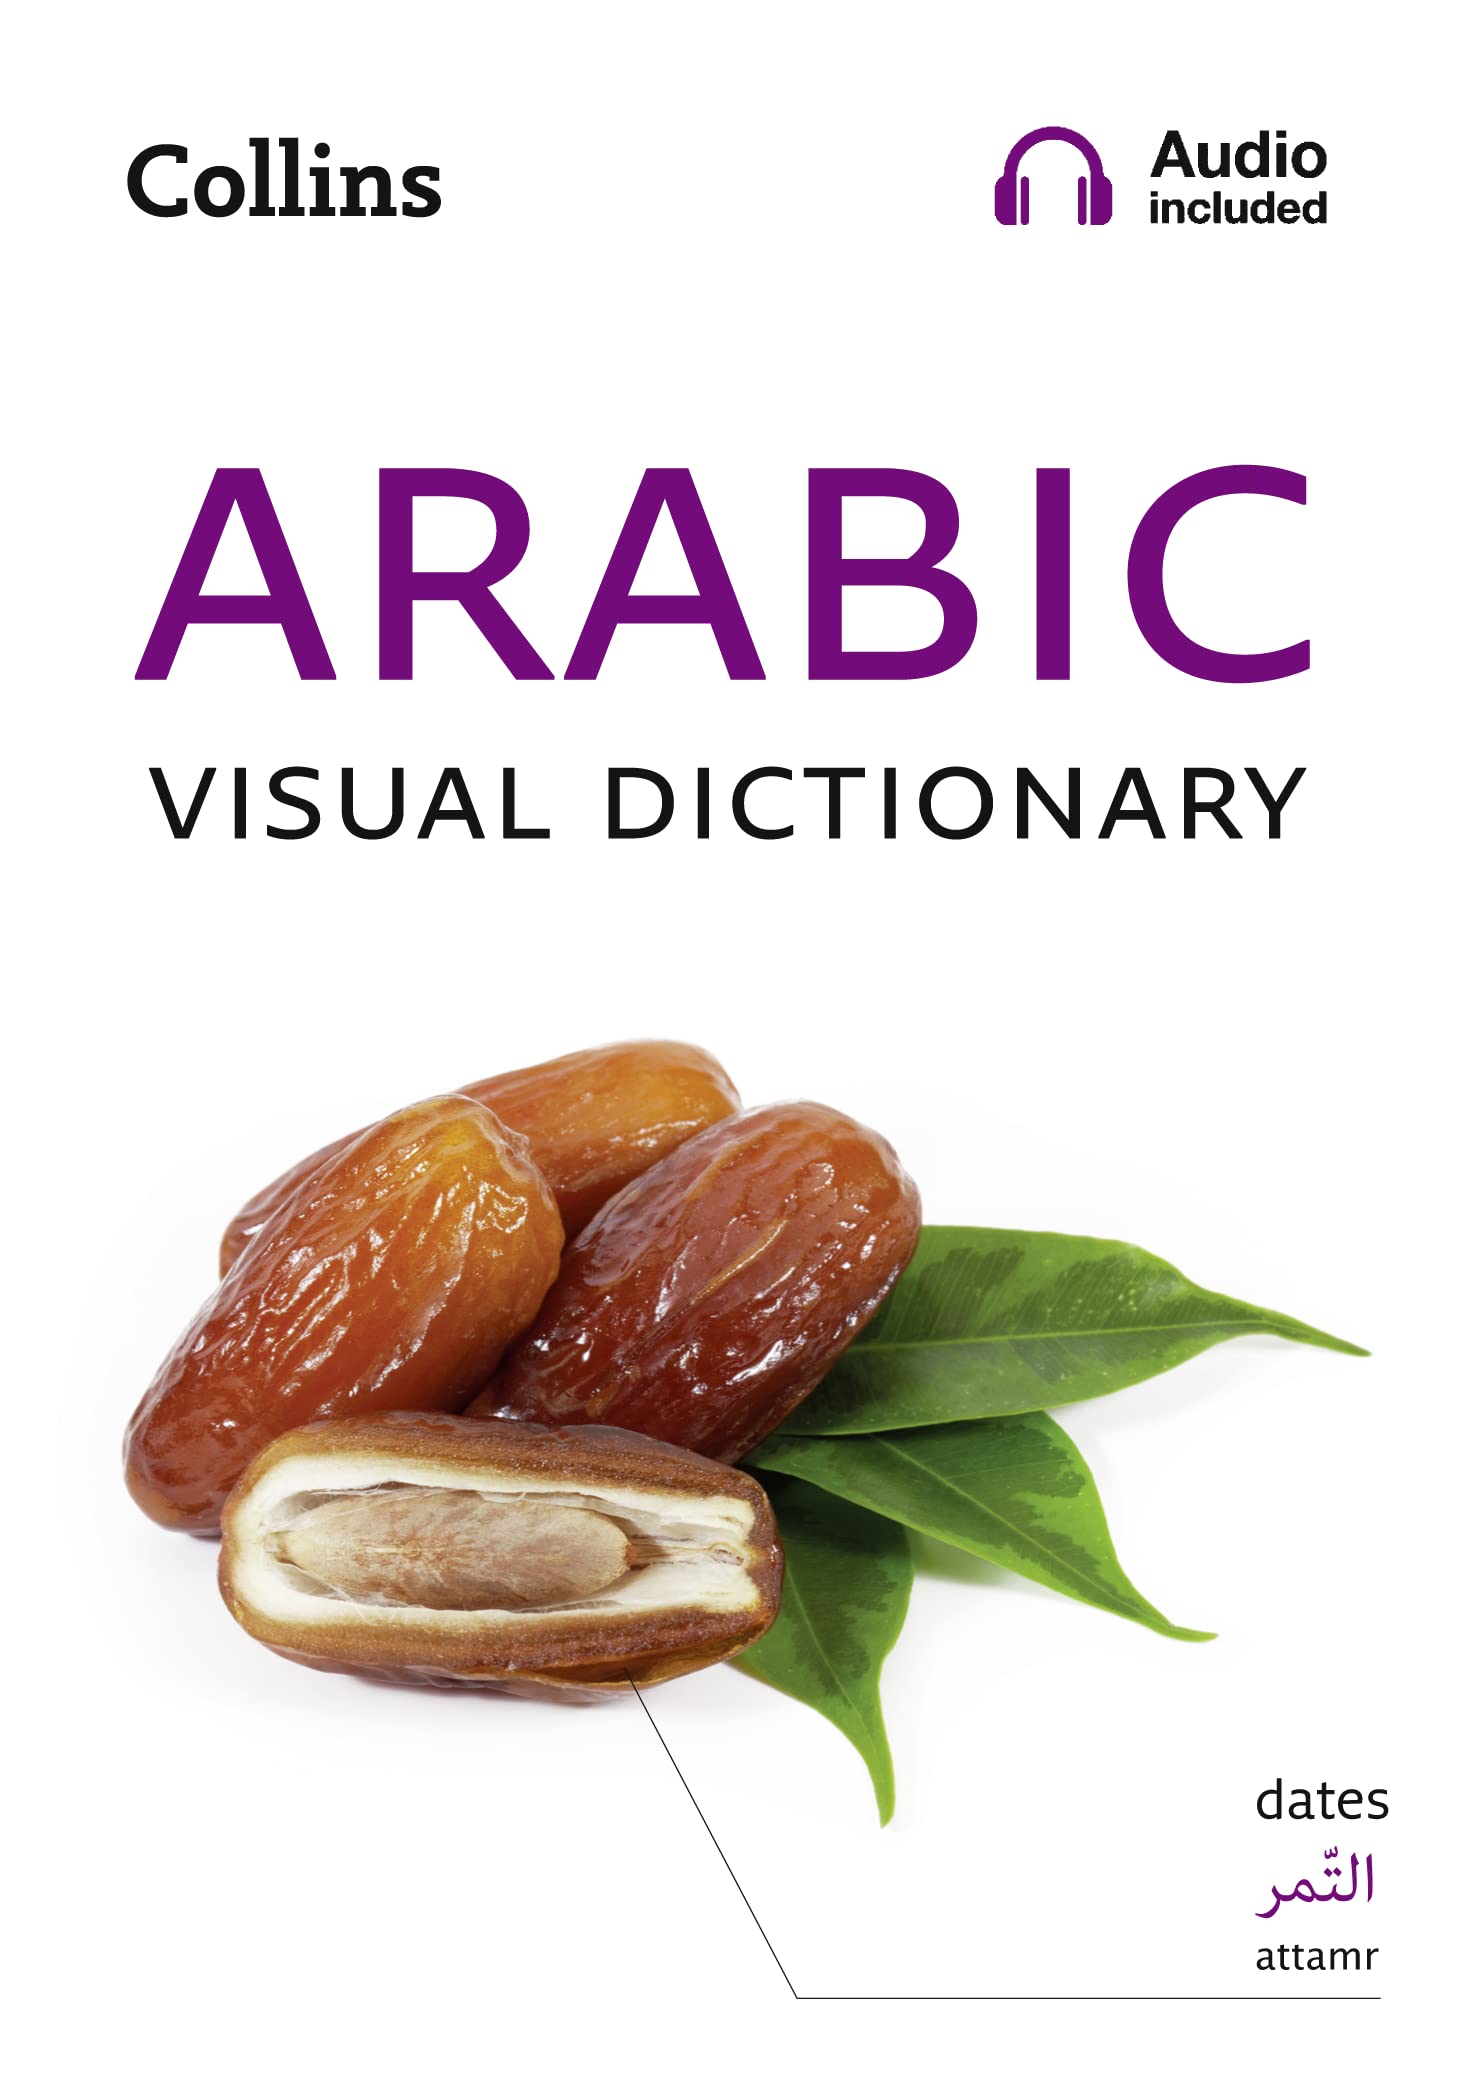 Collins Visual Dictionary: Arabic